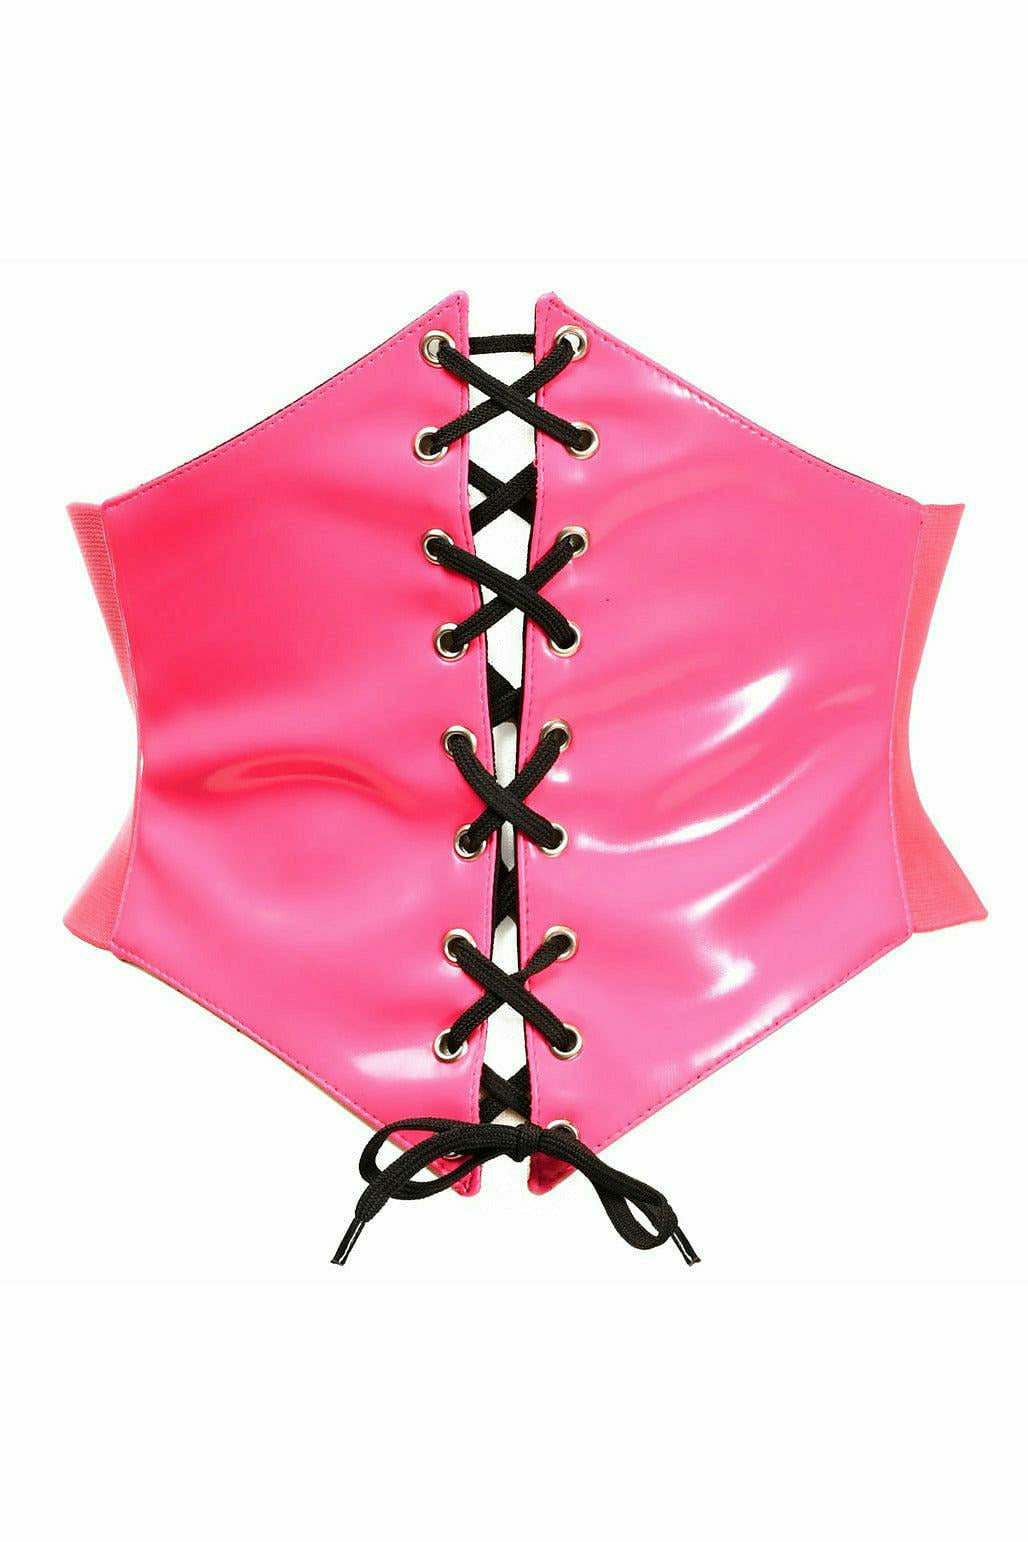 Daisy Corsets Lavish Hot Pink Patent Corset Belt Cincher